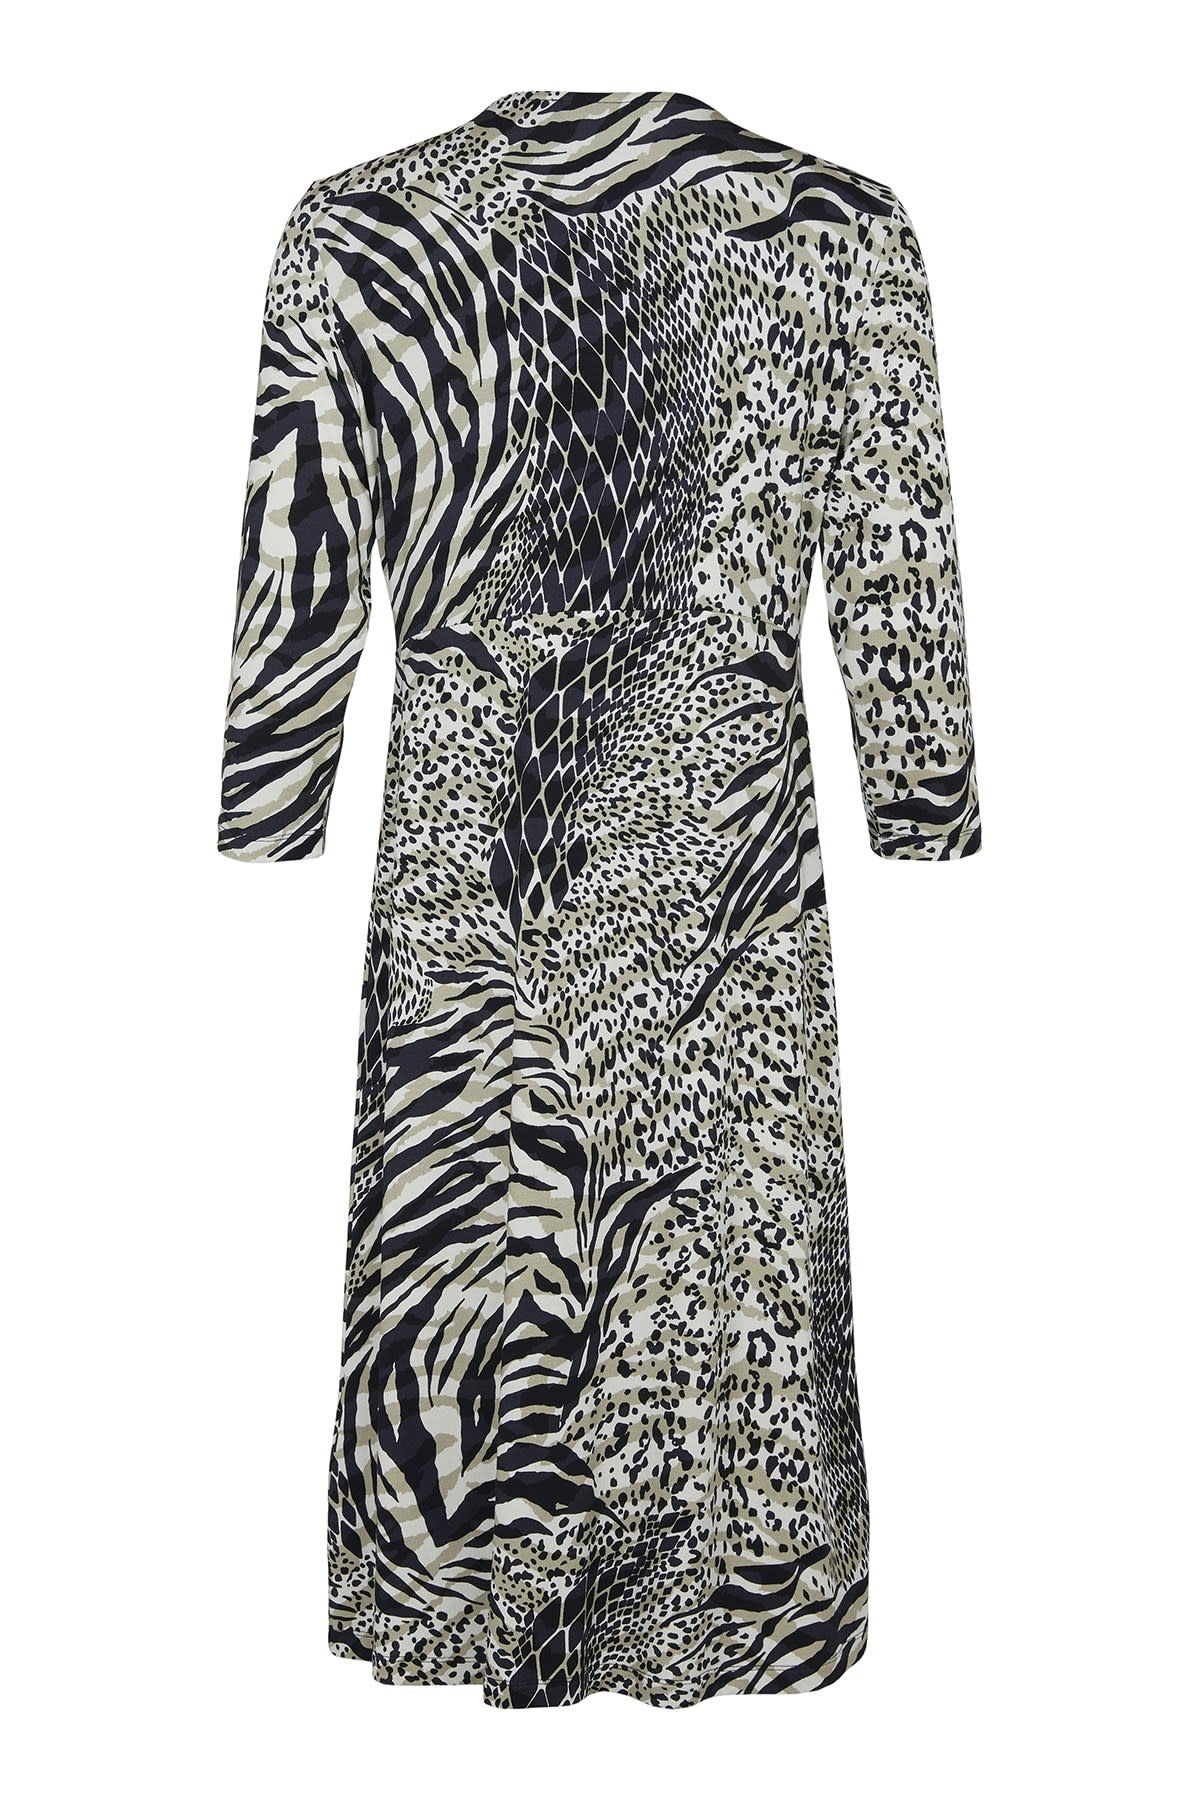 Jersey Dress - Abstract Animal Print